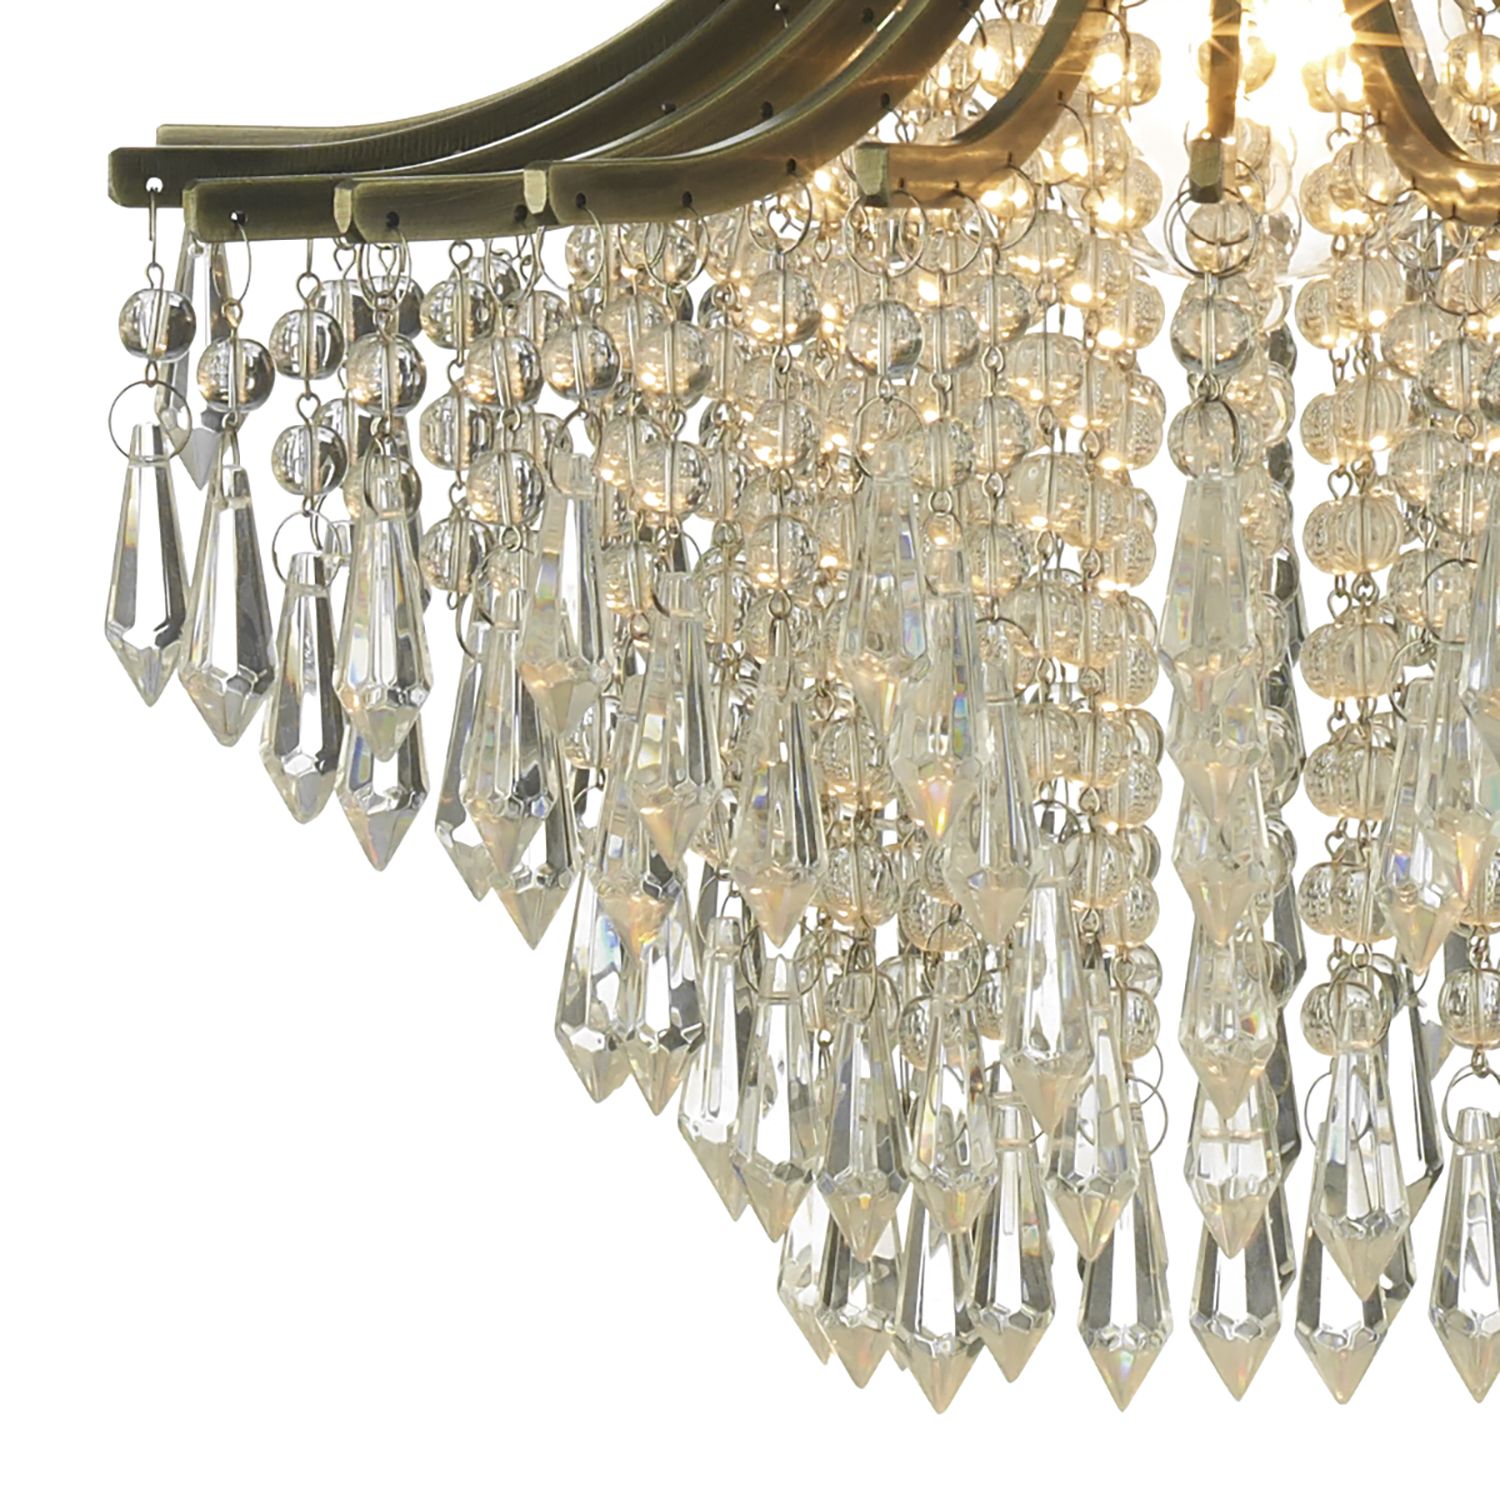 Suri 1 Light Crystal Ceiling Light Crystal - Polished Chrome/Antique Brass Finish